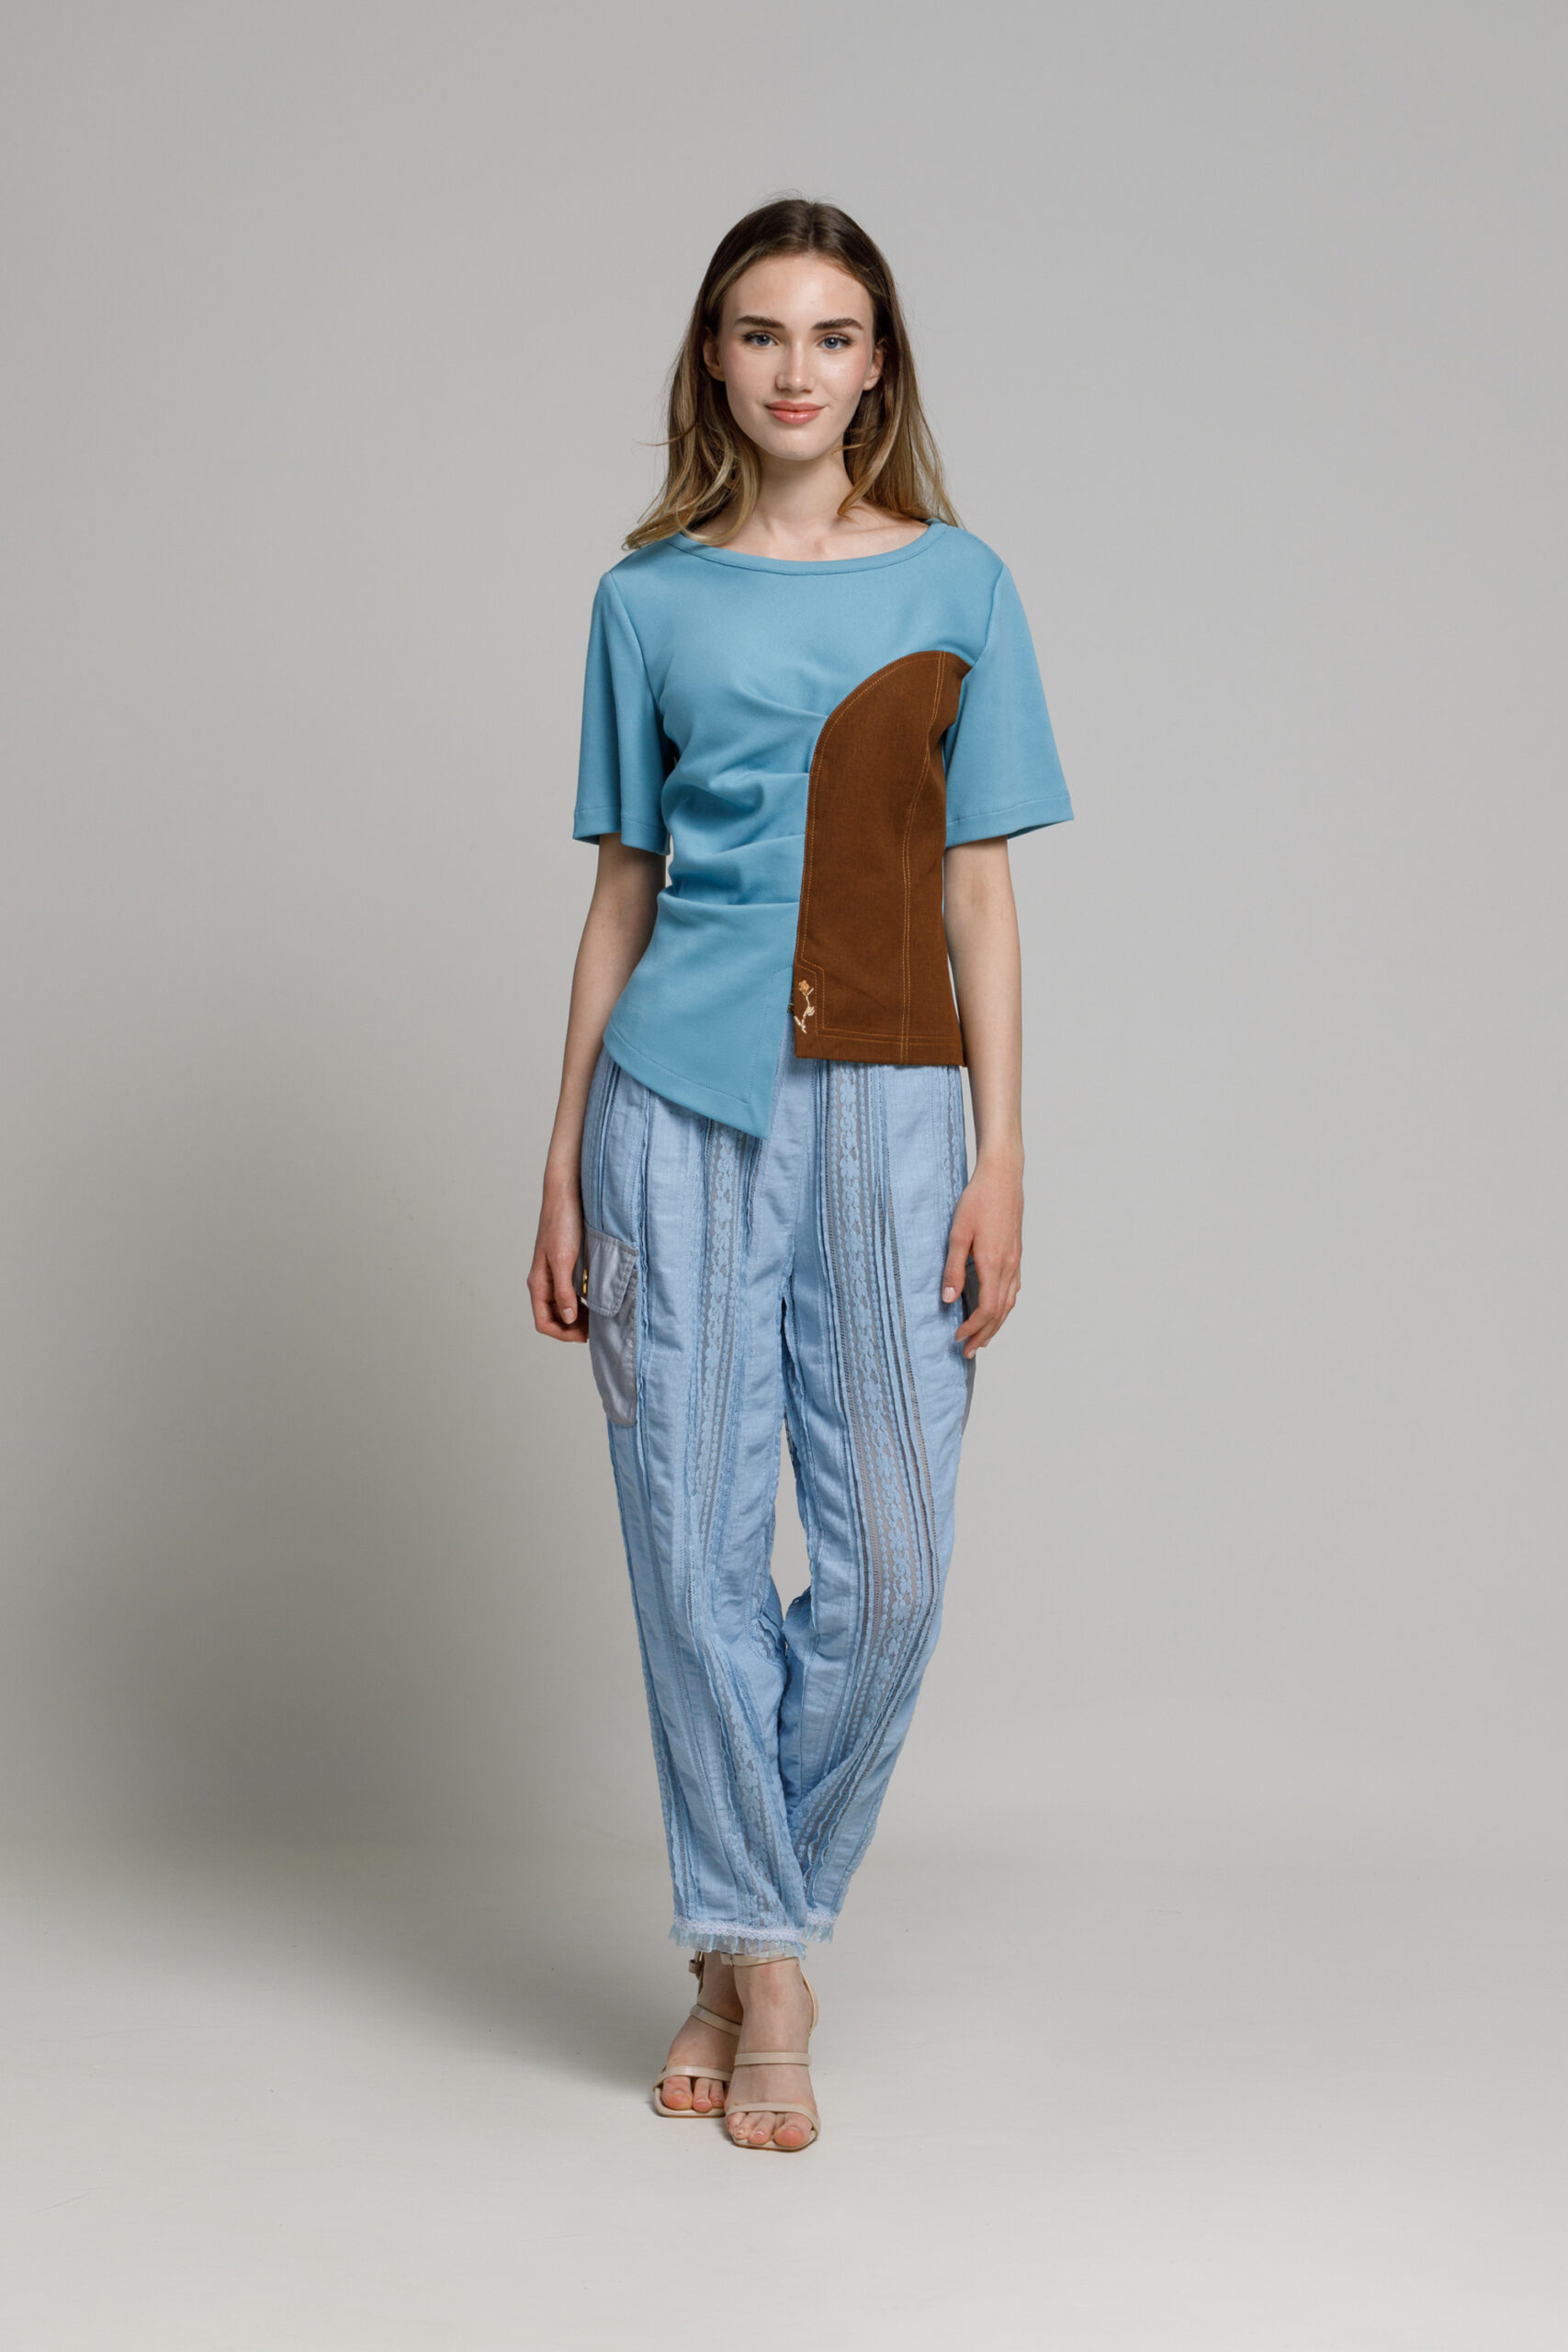 CHIARA blue blouse. Natural fabrics, original design, handmade embroidery